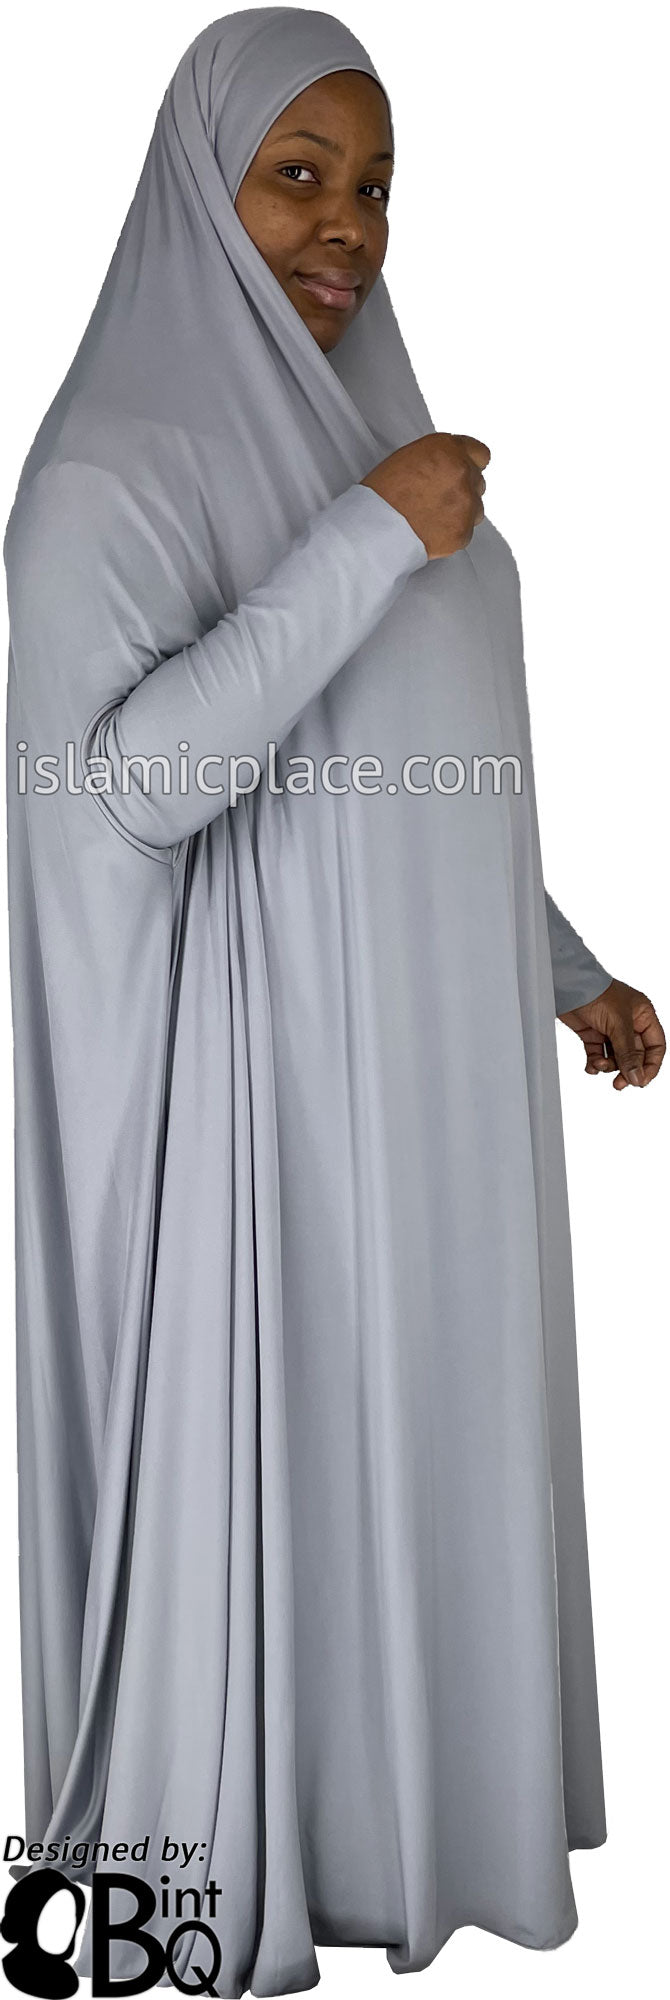 Slate Gray - Plain Overhead Abaya with Cuffs